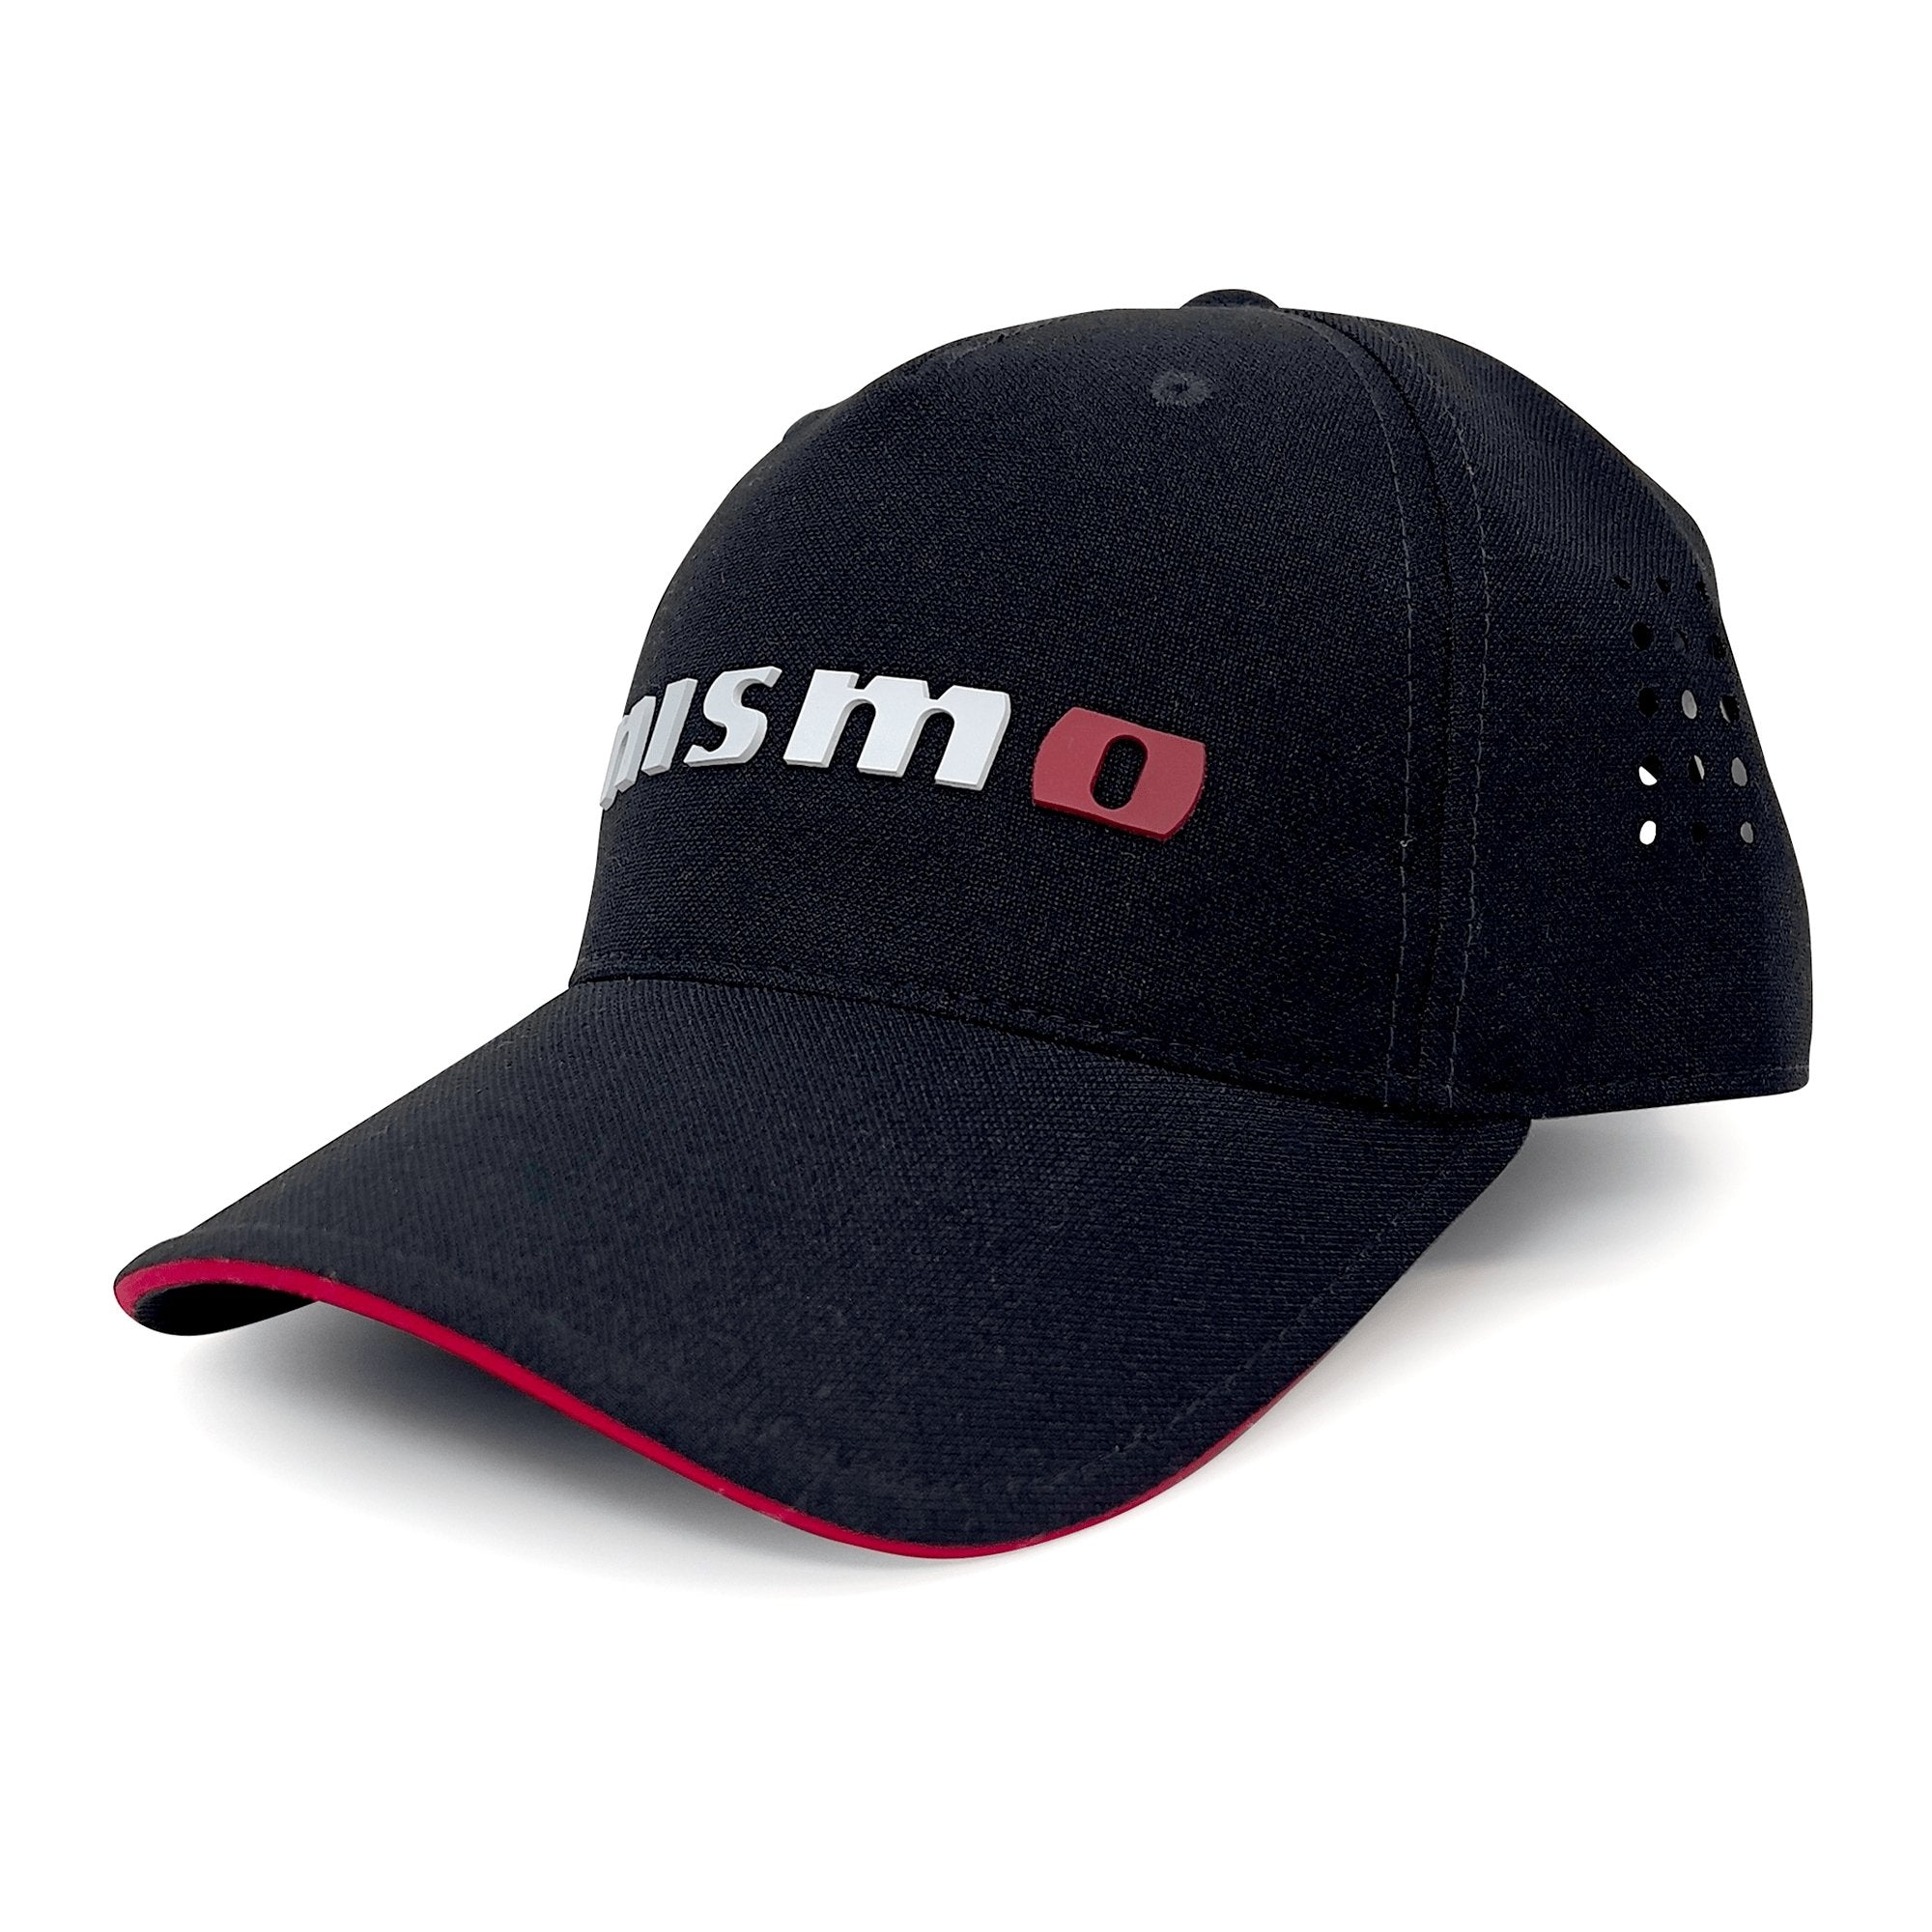 New Japanese JDM Nissan Nismo Super GT Racing Punching Hat Black